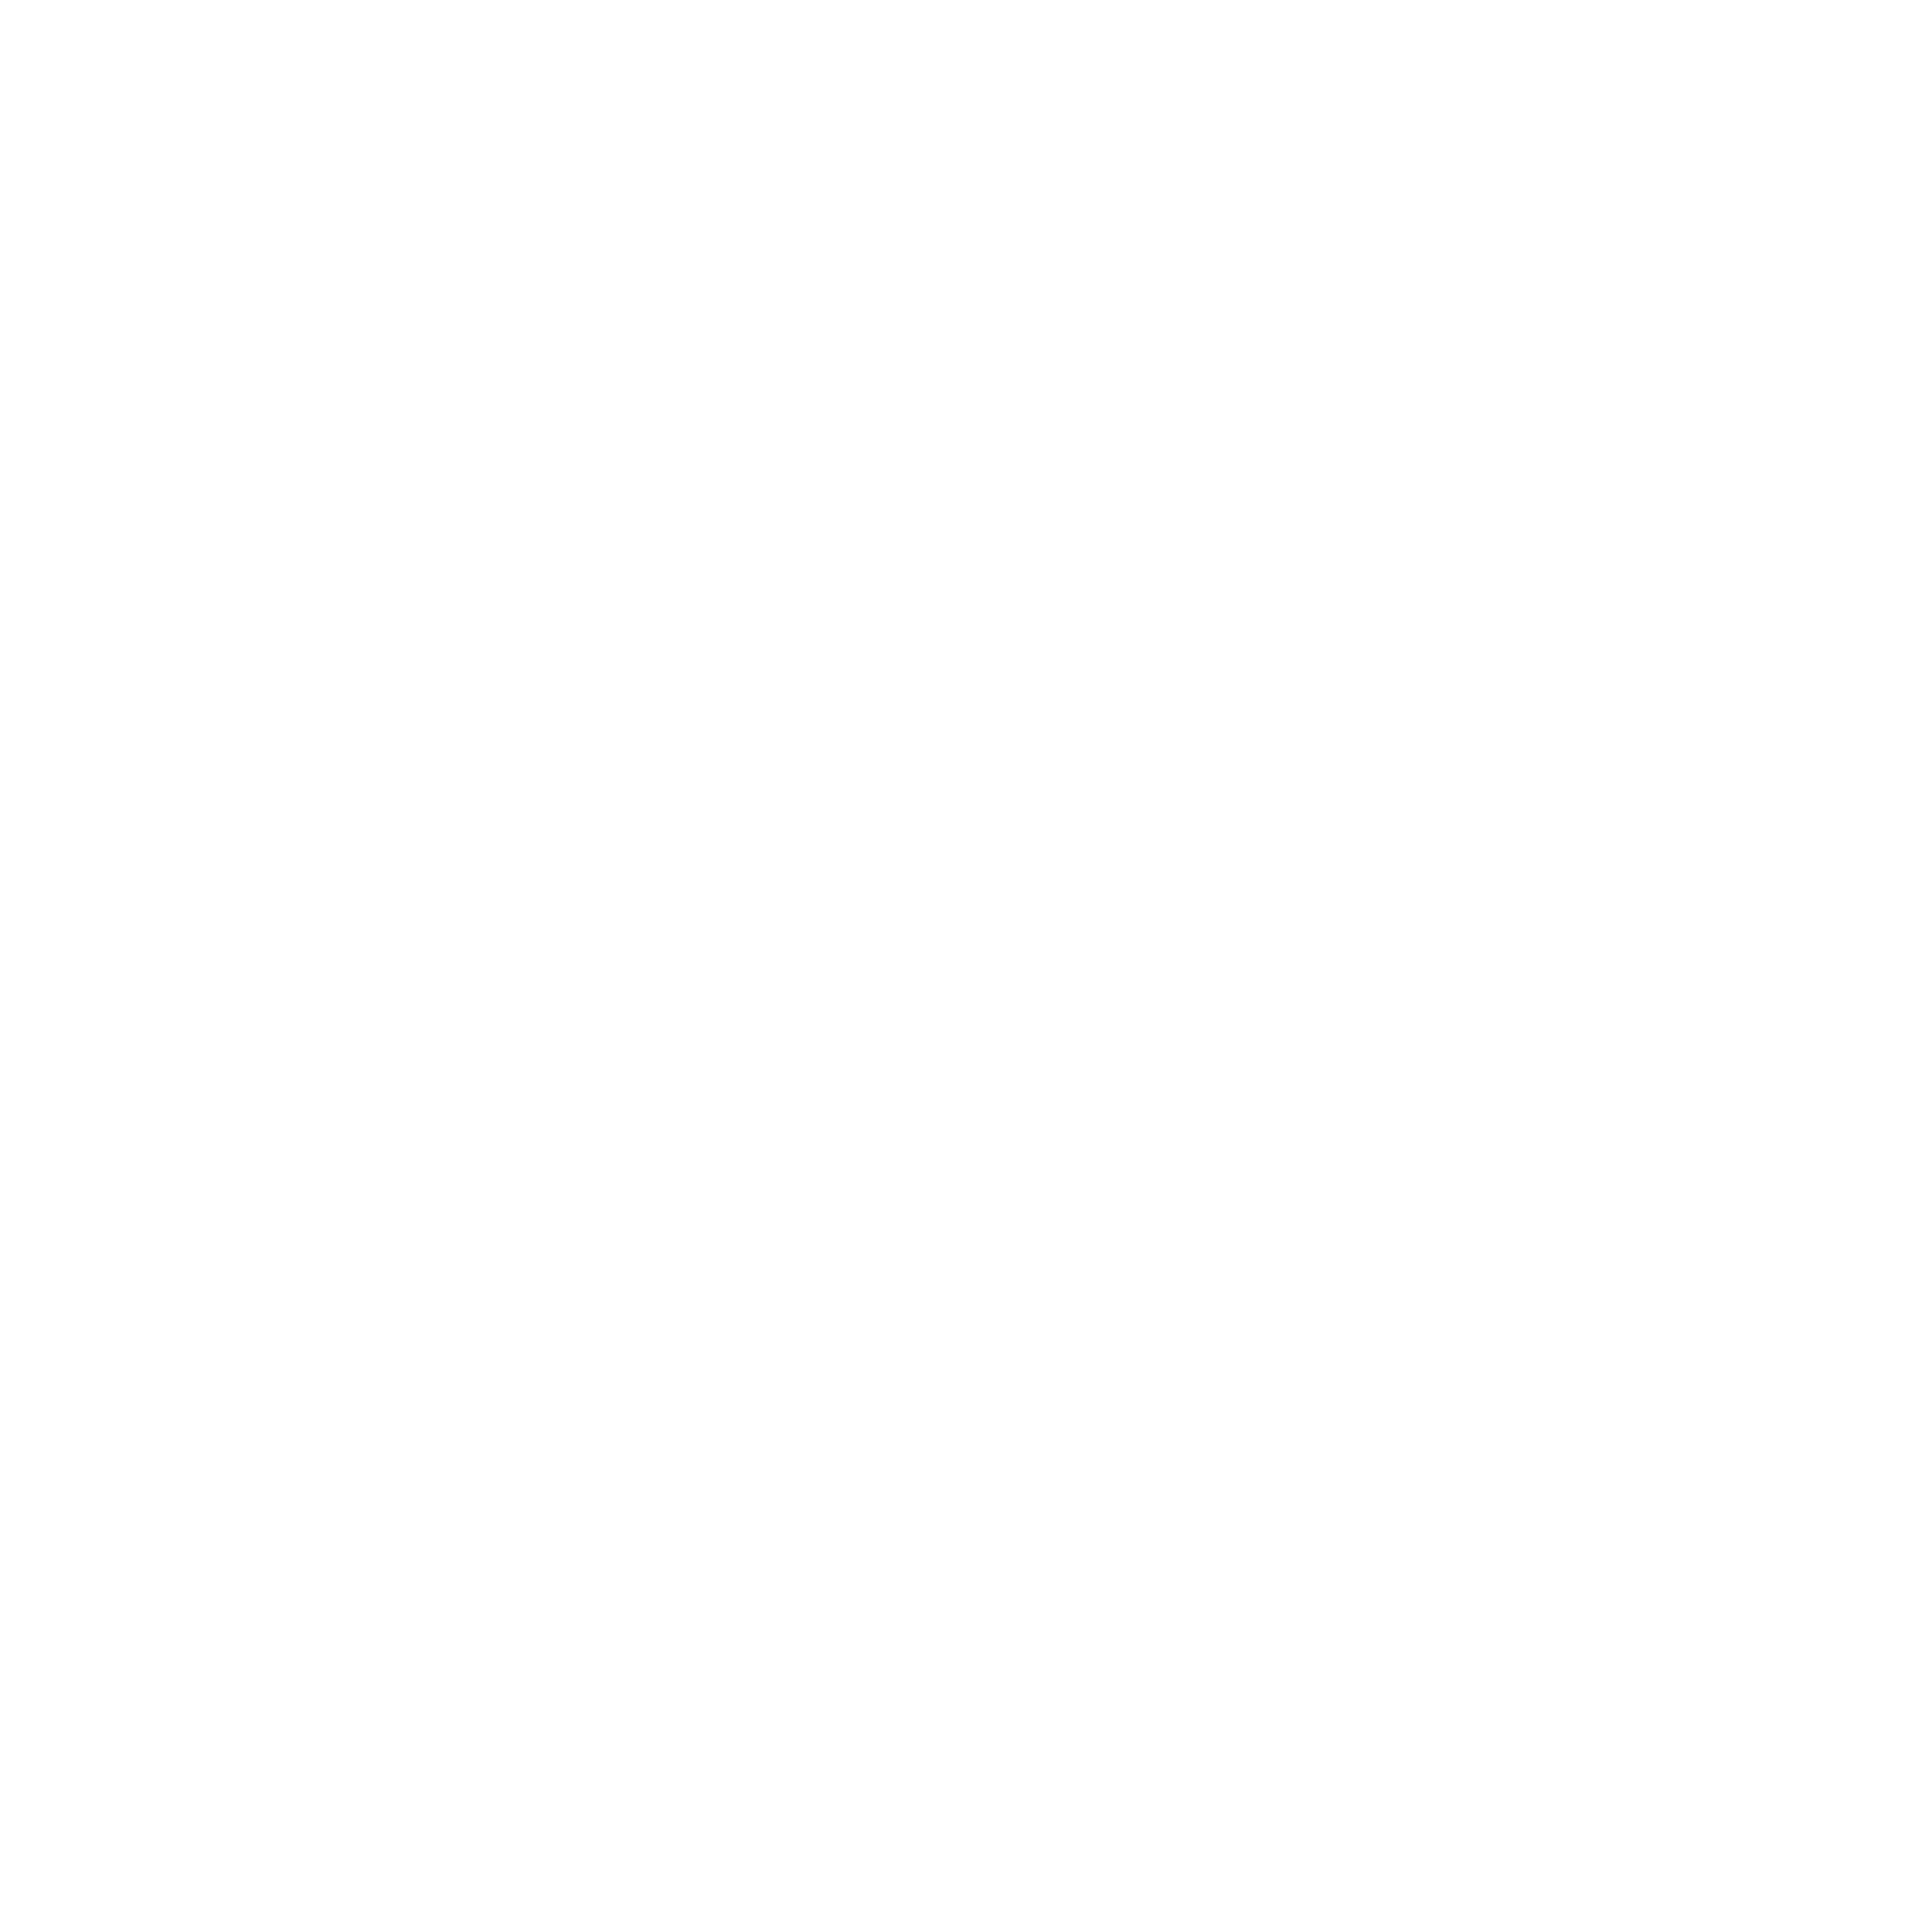 Tinajas